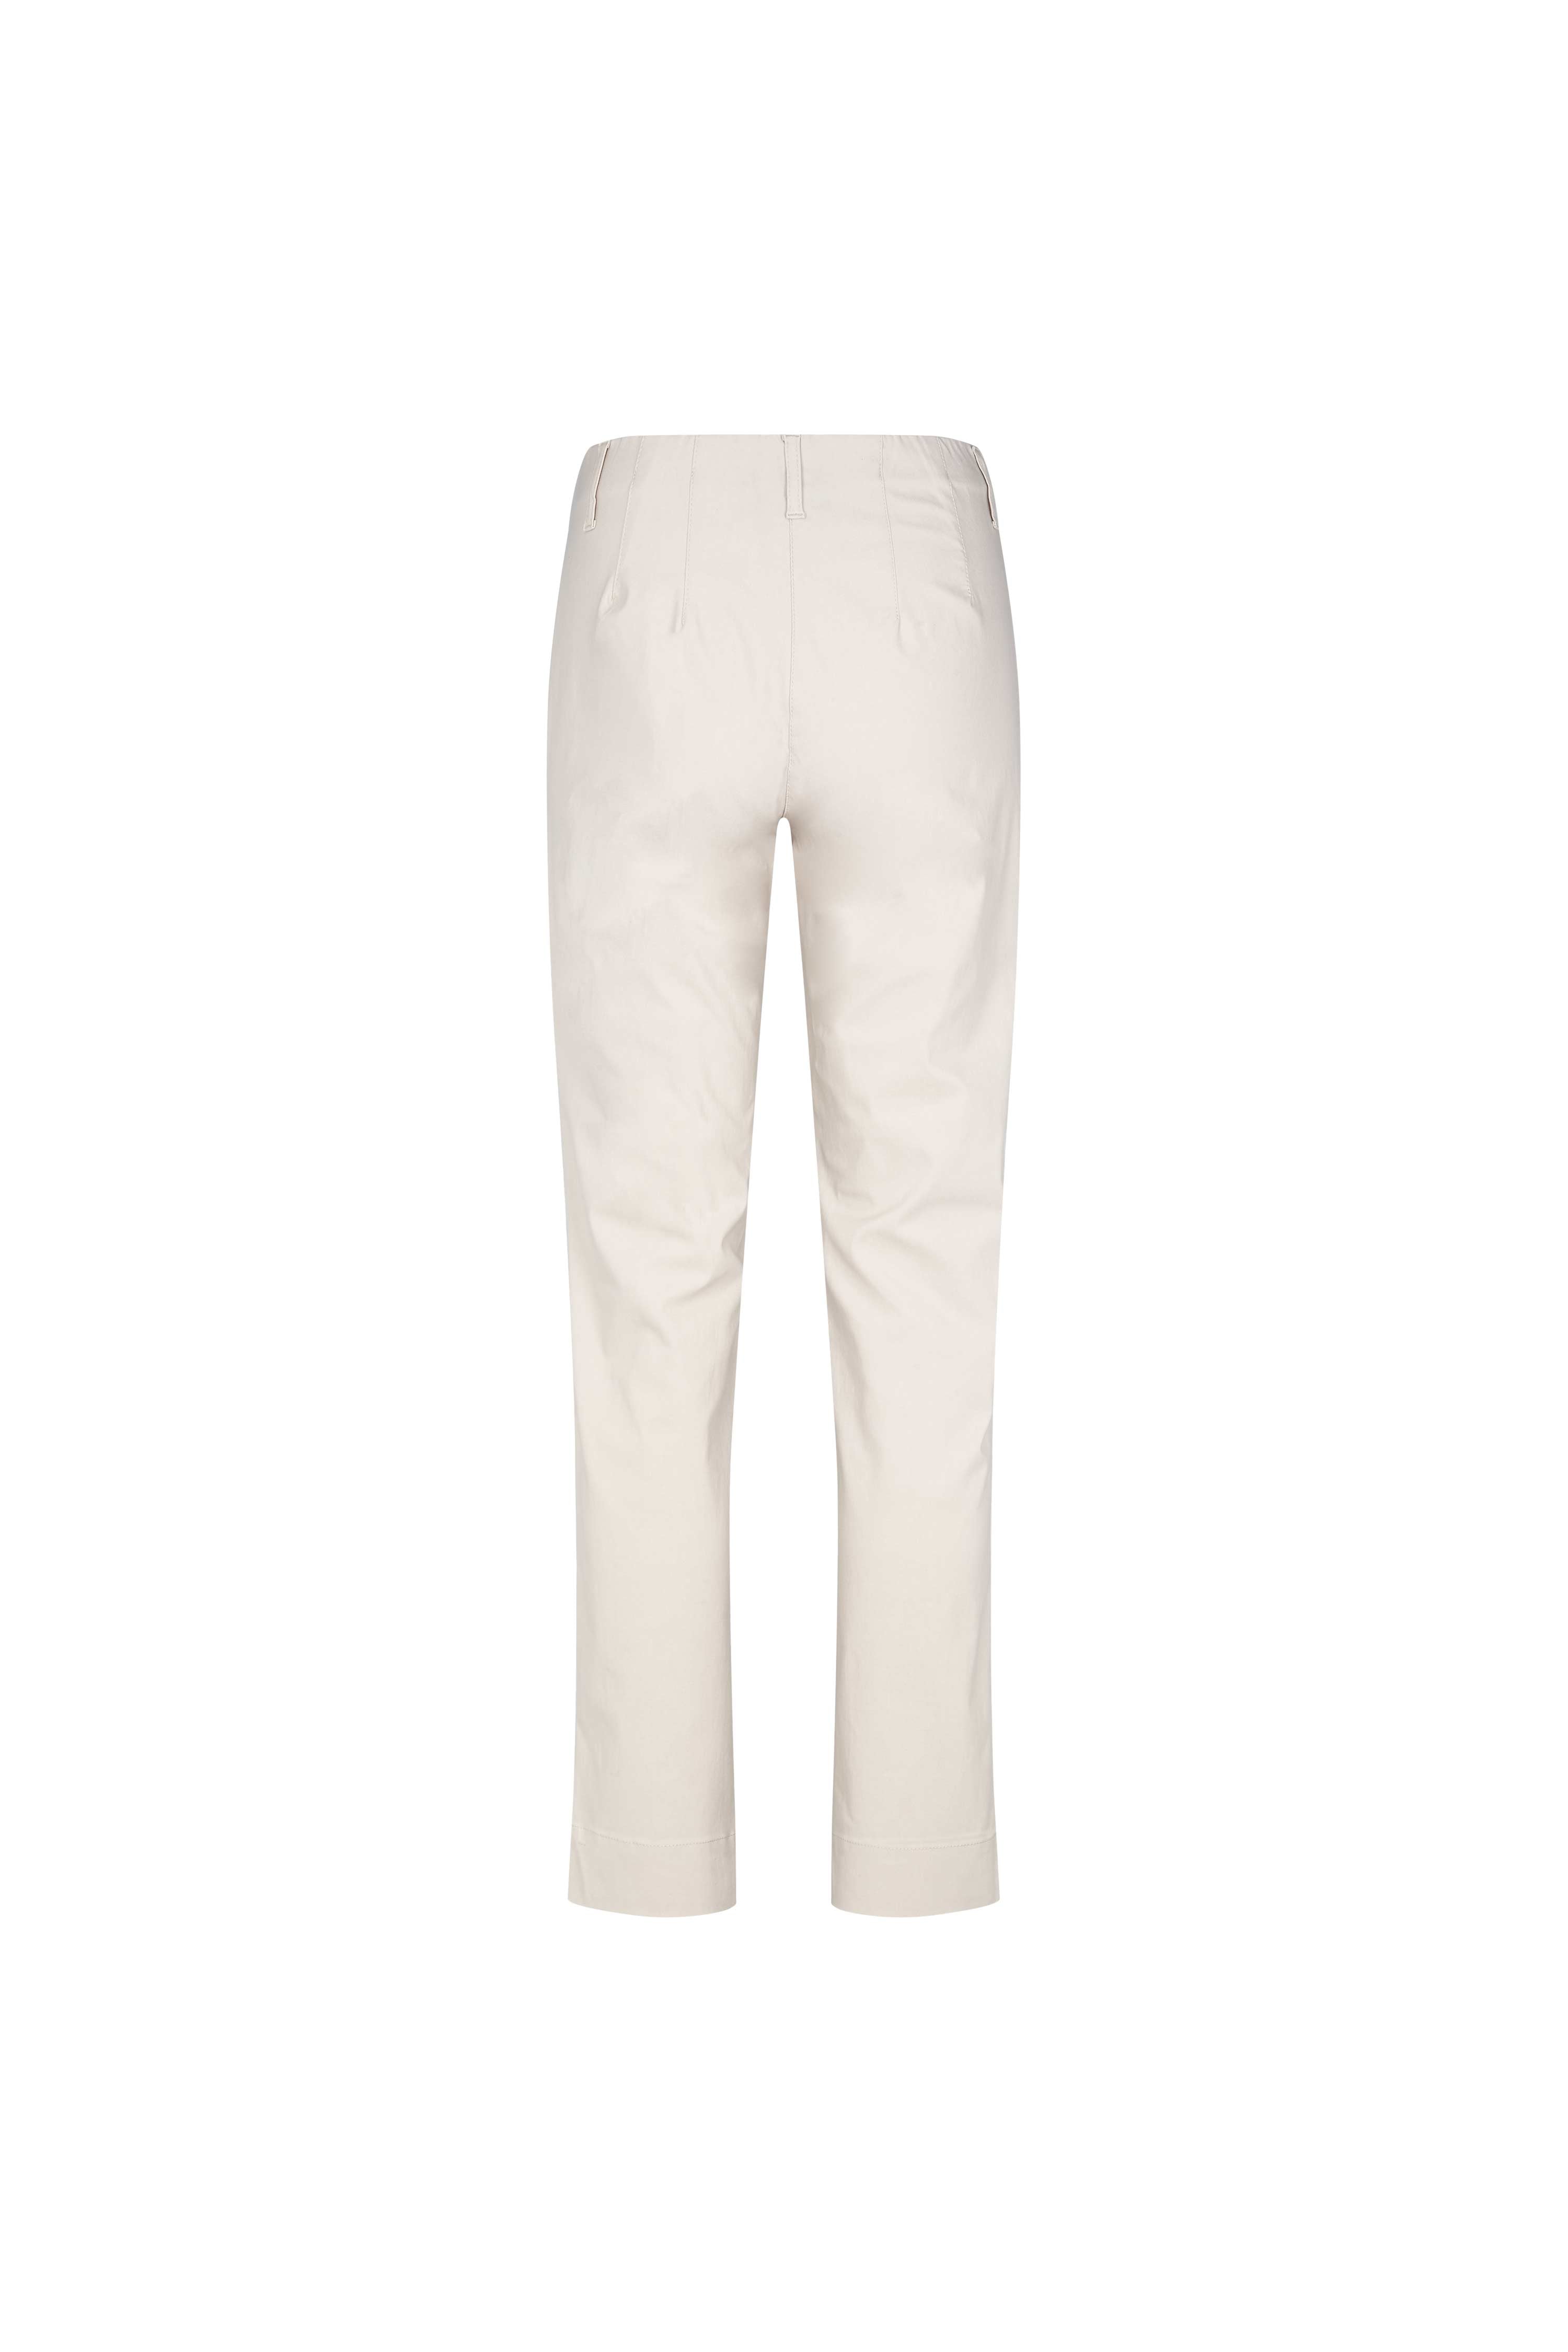 LAURIE Kelly Regular - Medium Length Trousers REGULAR Grau sand